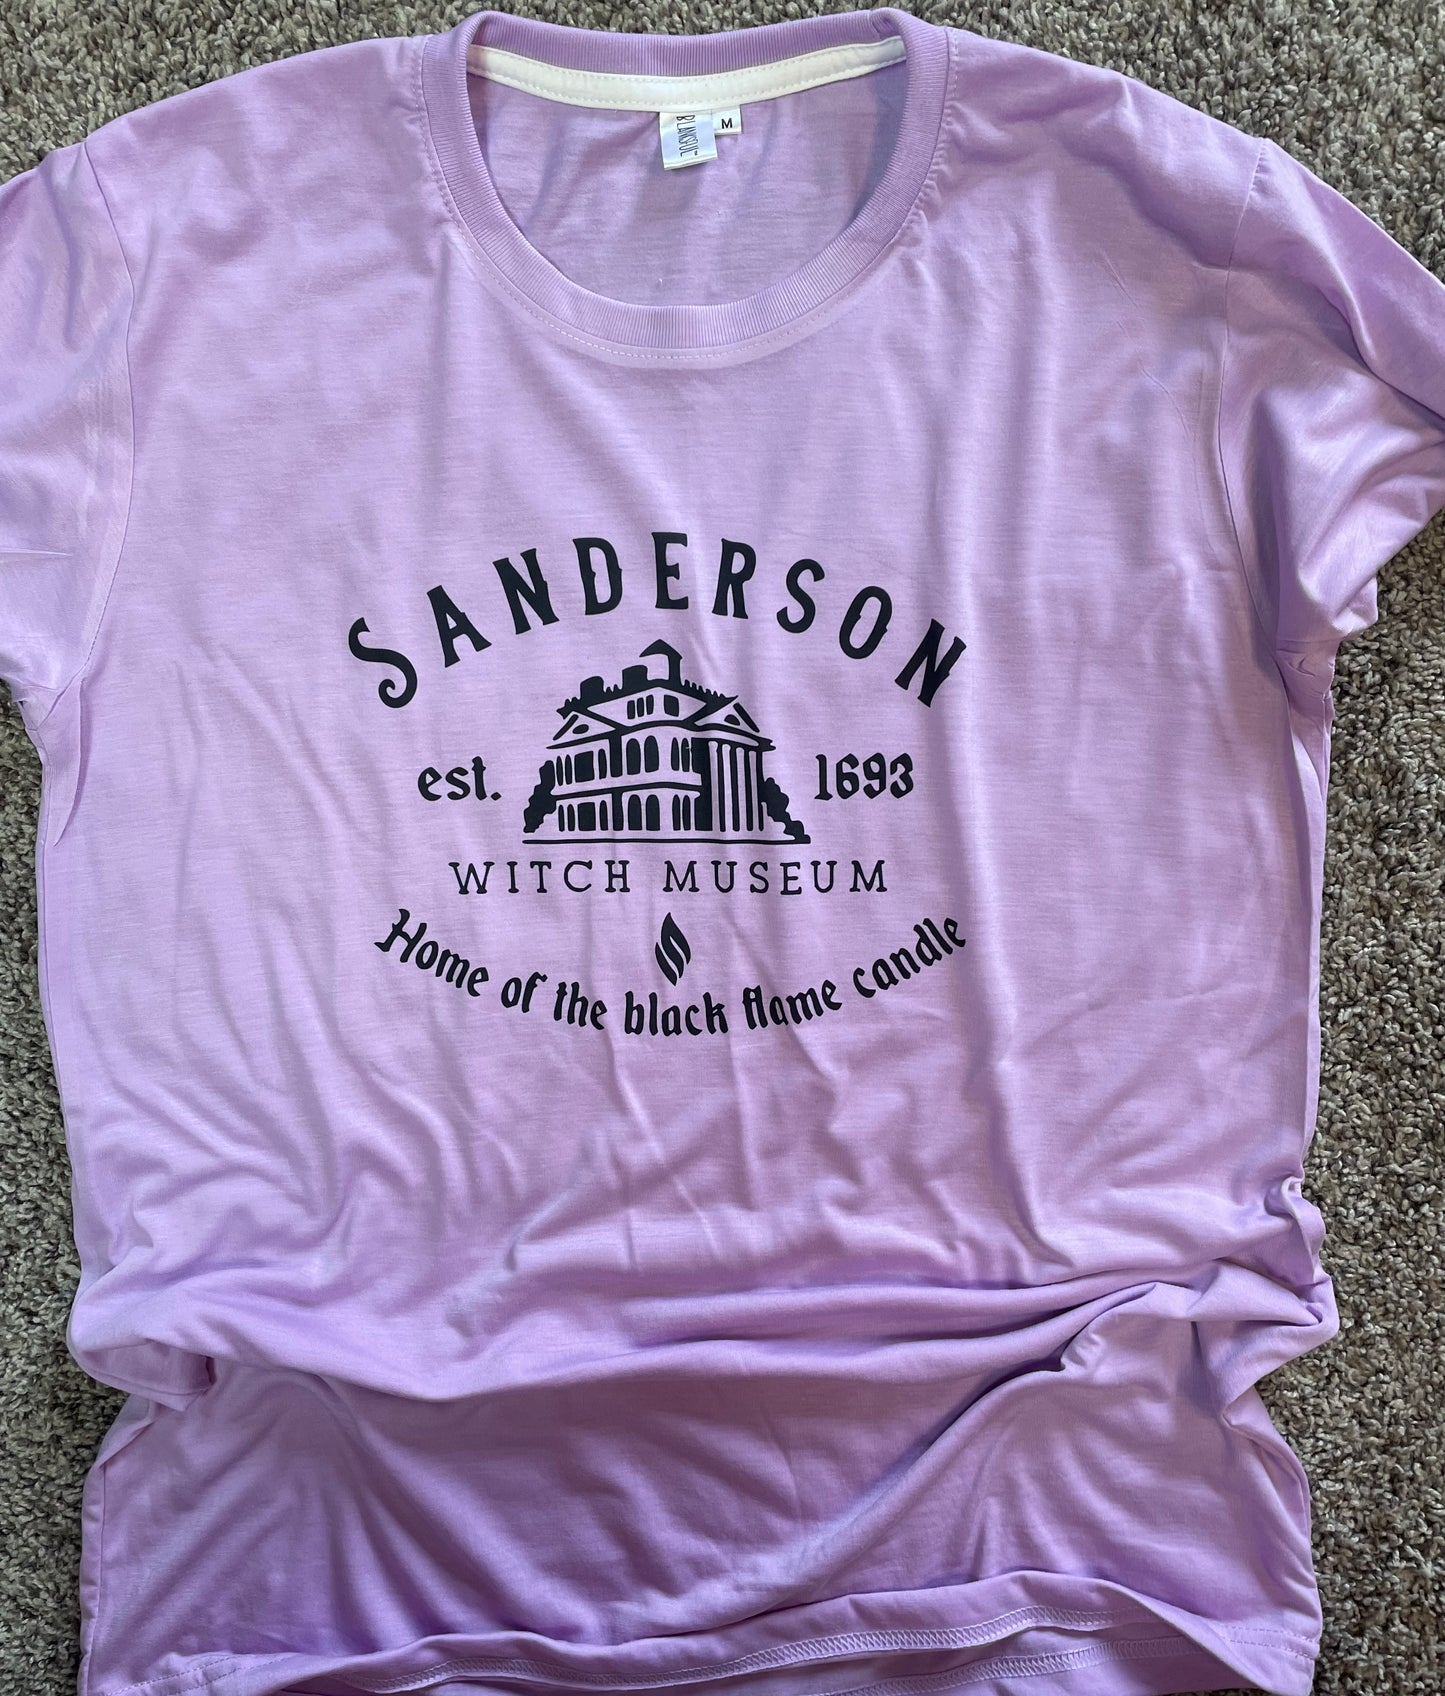 Sanderson Established 1693 Teeshirt